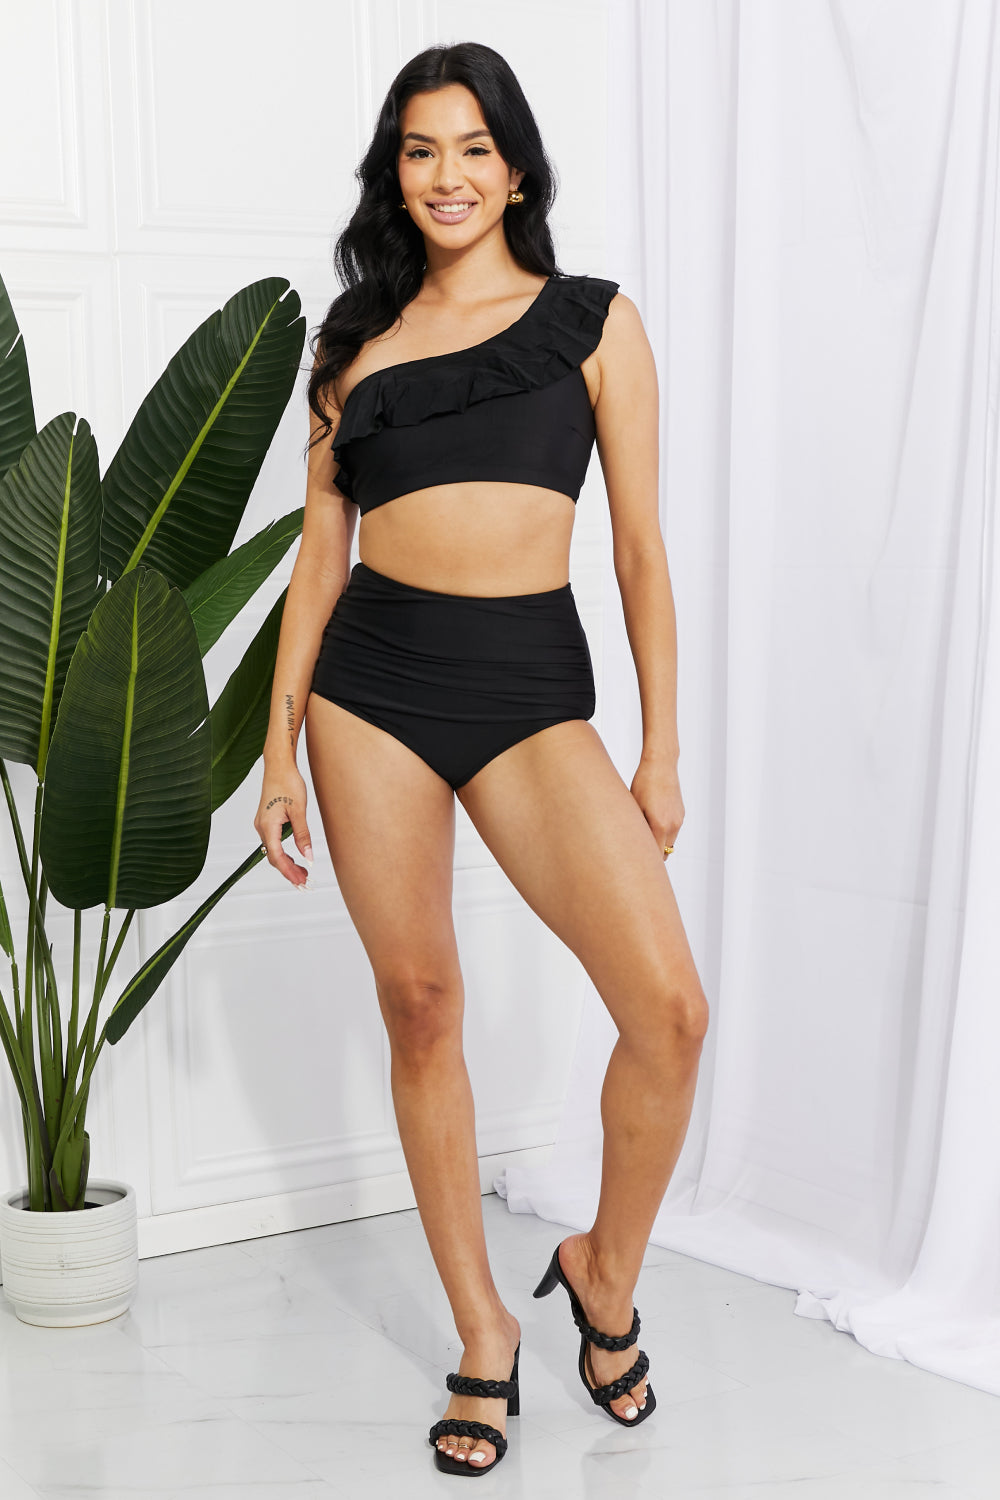 Marina West Swim Seaside Romance Ruffle One-Shoulder Bikini in Black free shipping -Oh Em Gee Boutique